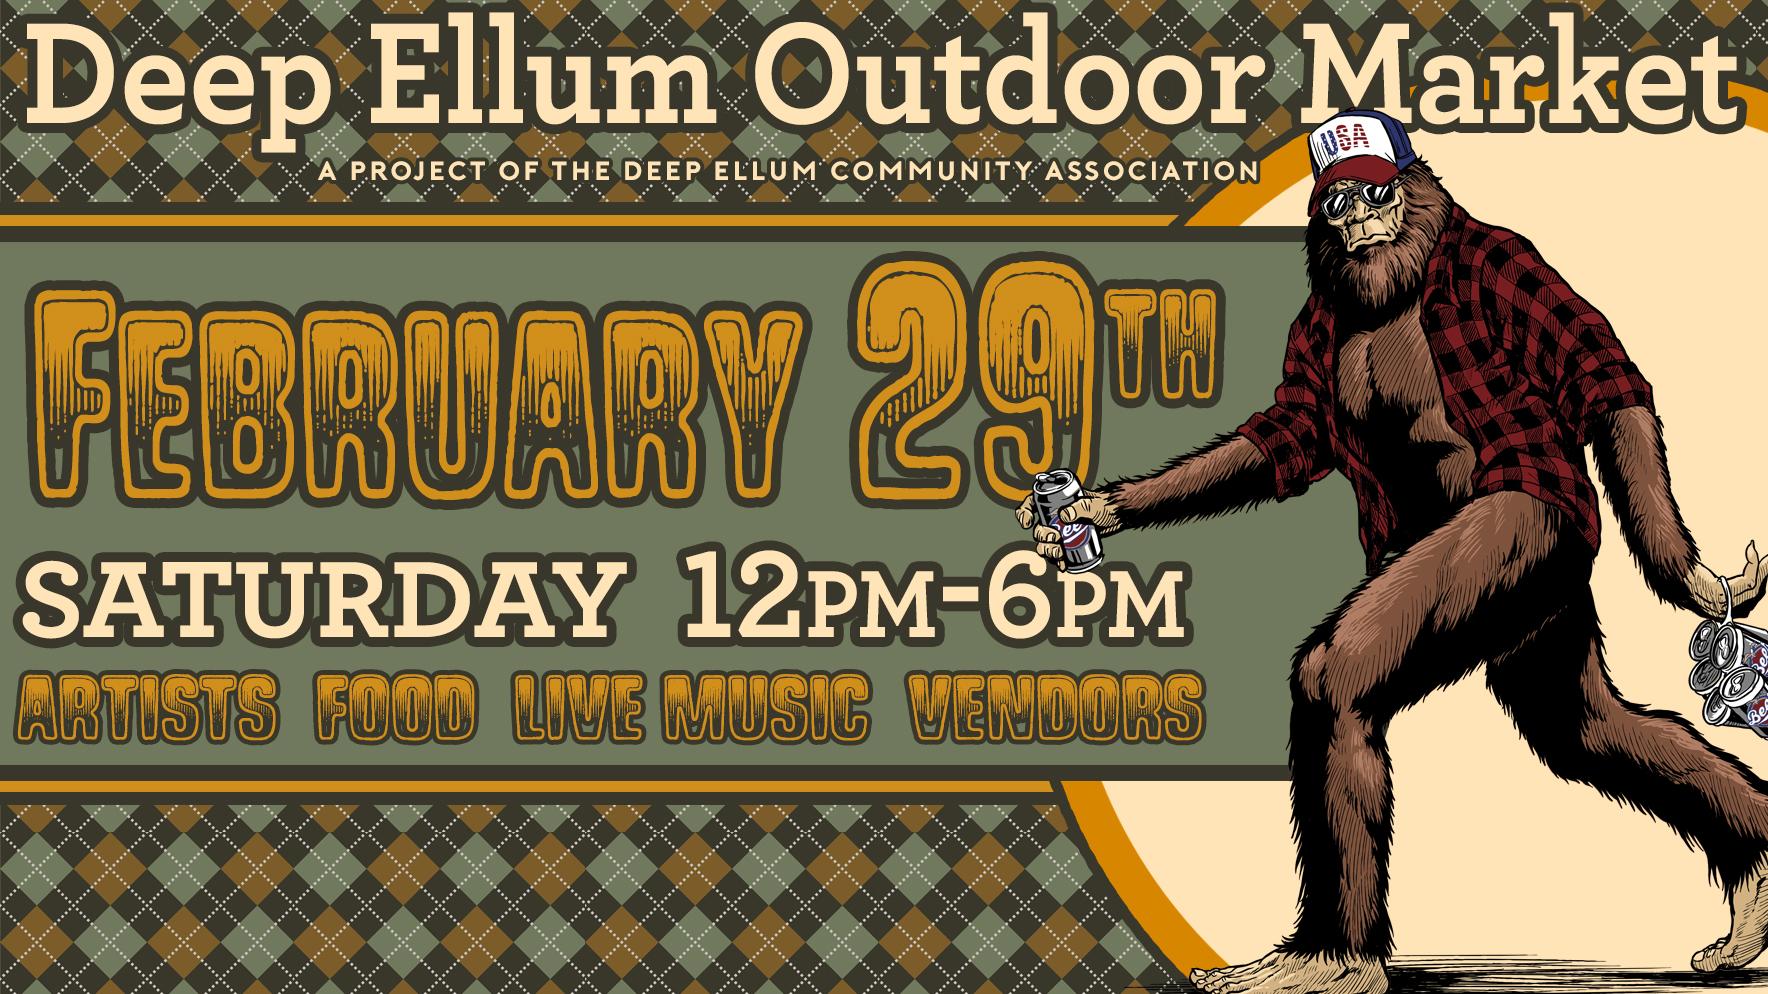 FREE EVENT - DEEP ELLUM OUTDOOR MARKET FEBRUARY 29TH